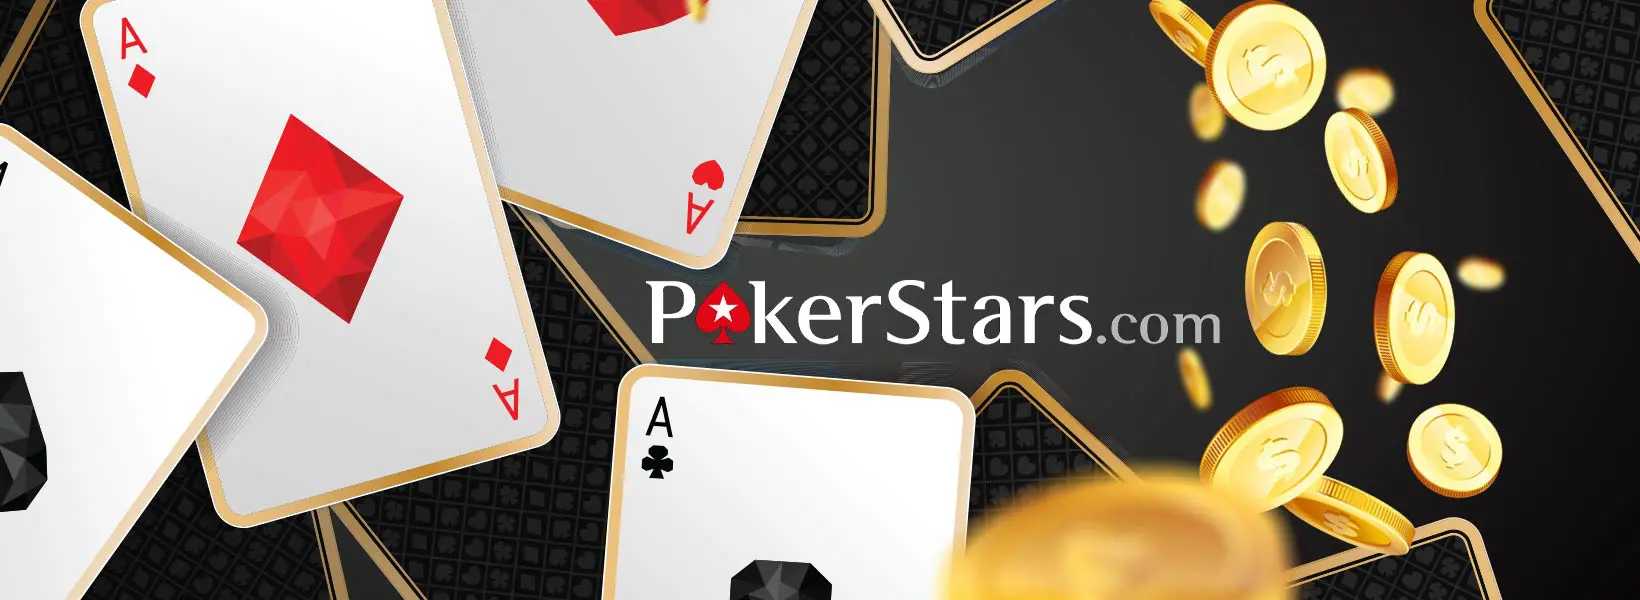 bonus pokerstars logo